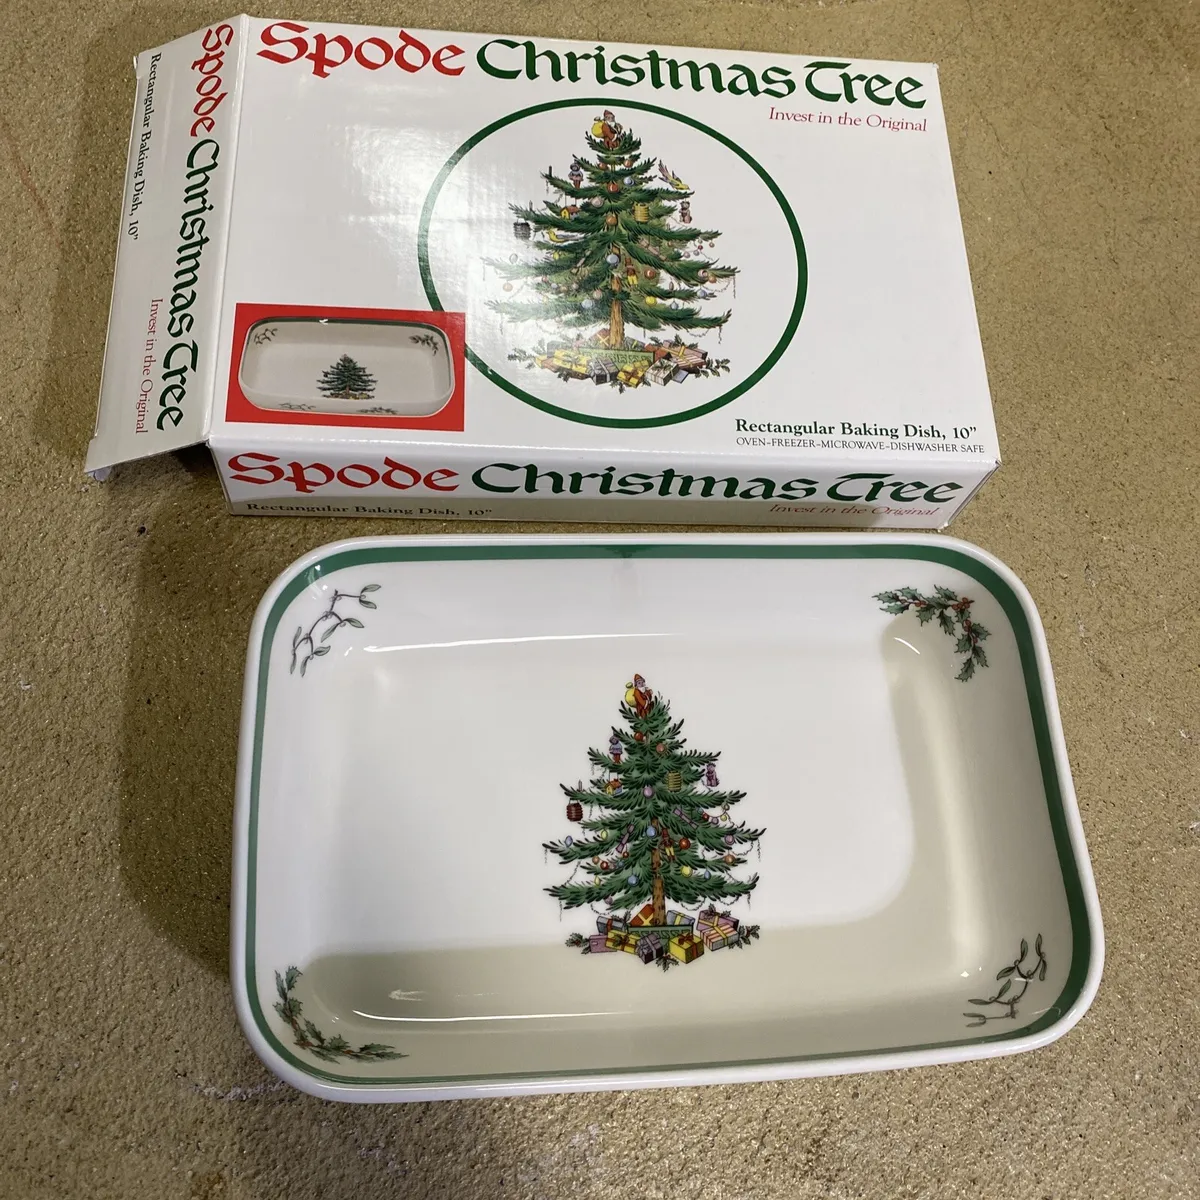 Spode Christmas Tree Oven to Table 10” Rectangular Baking Dish